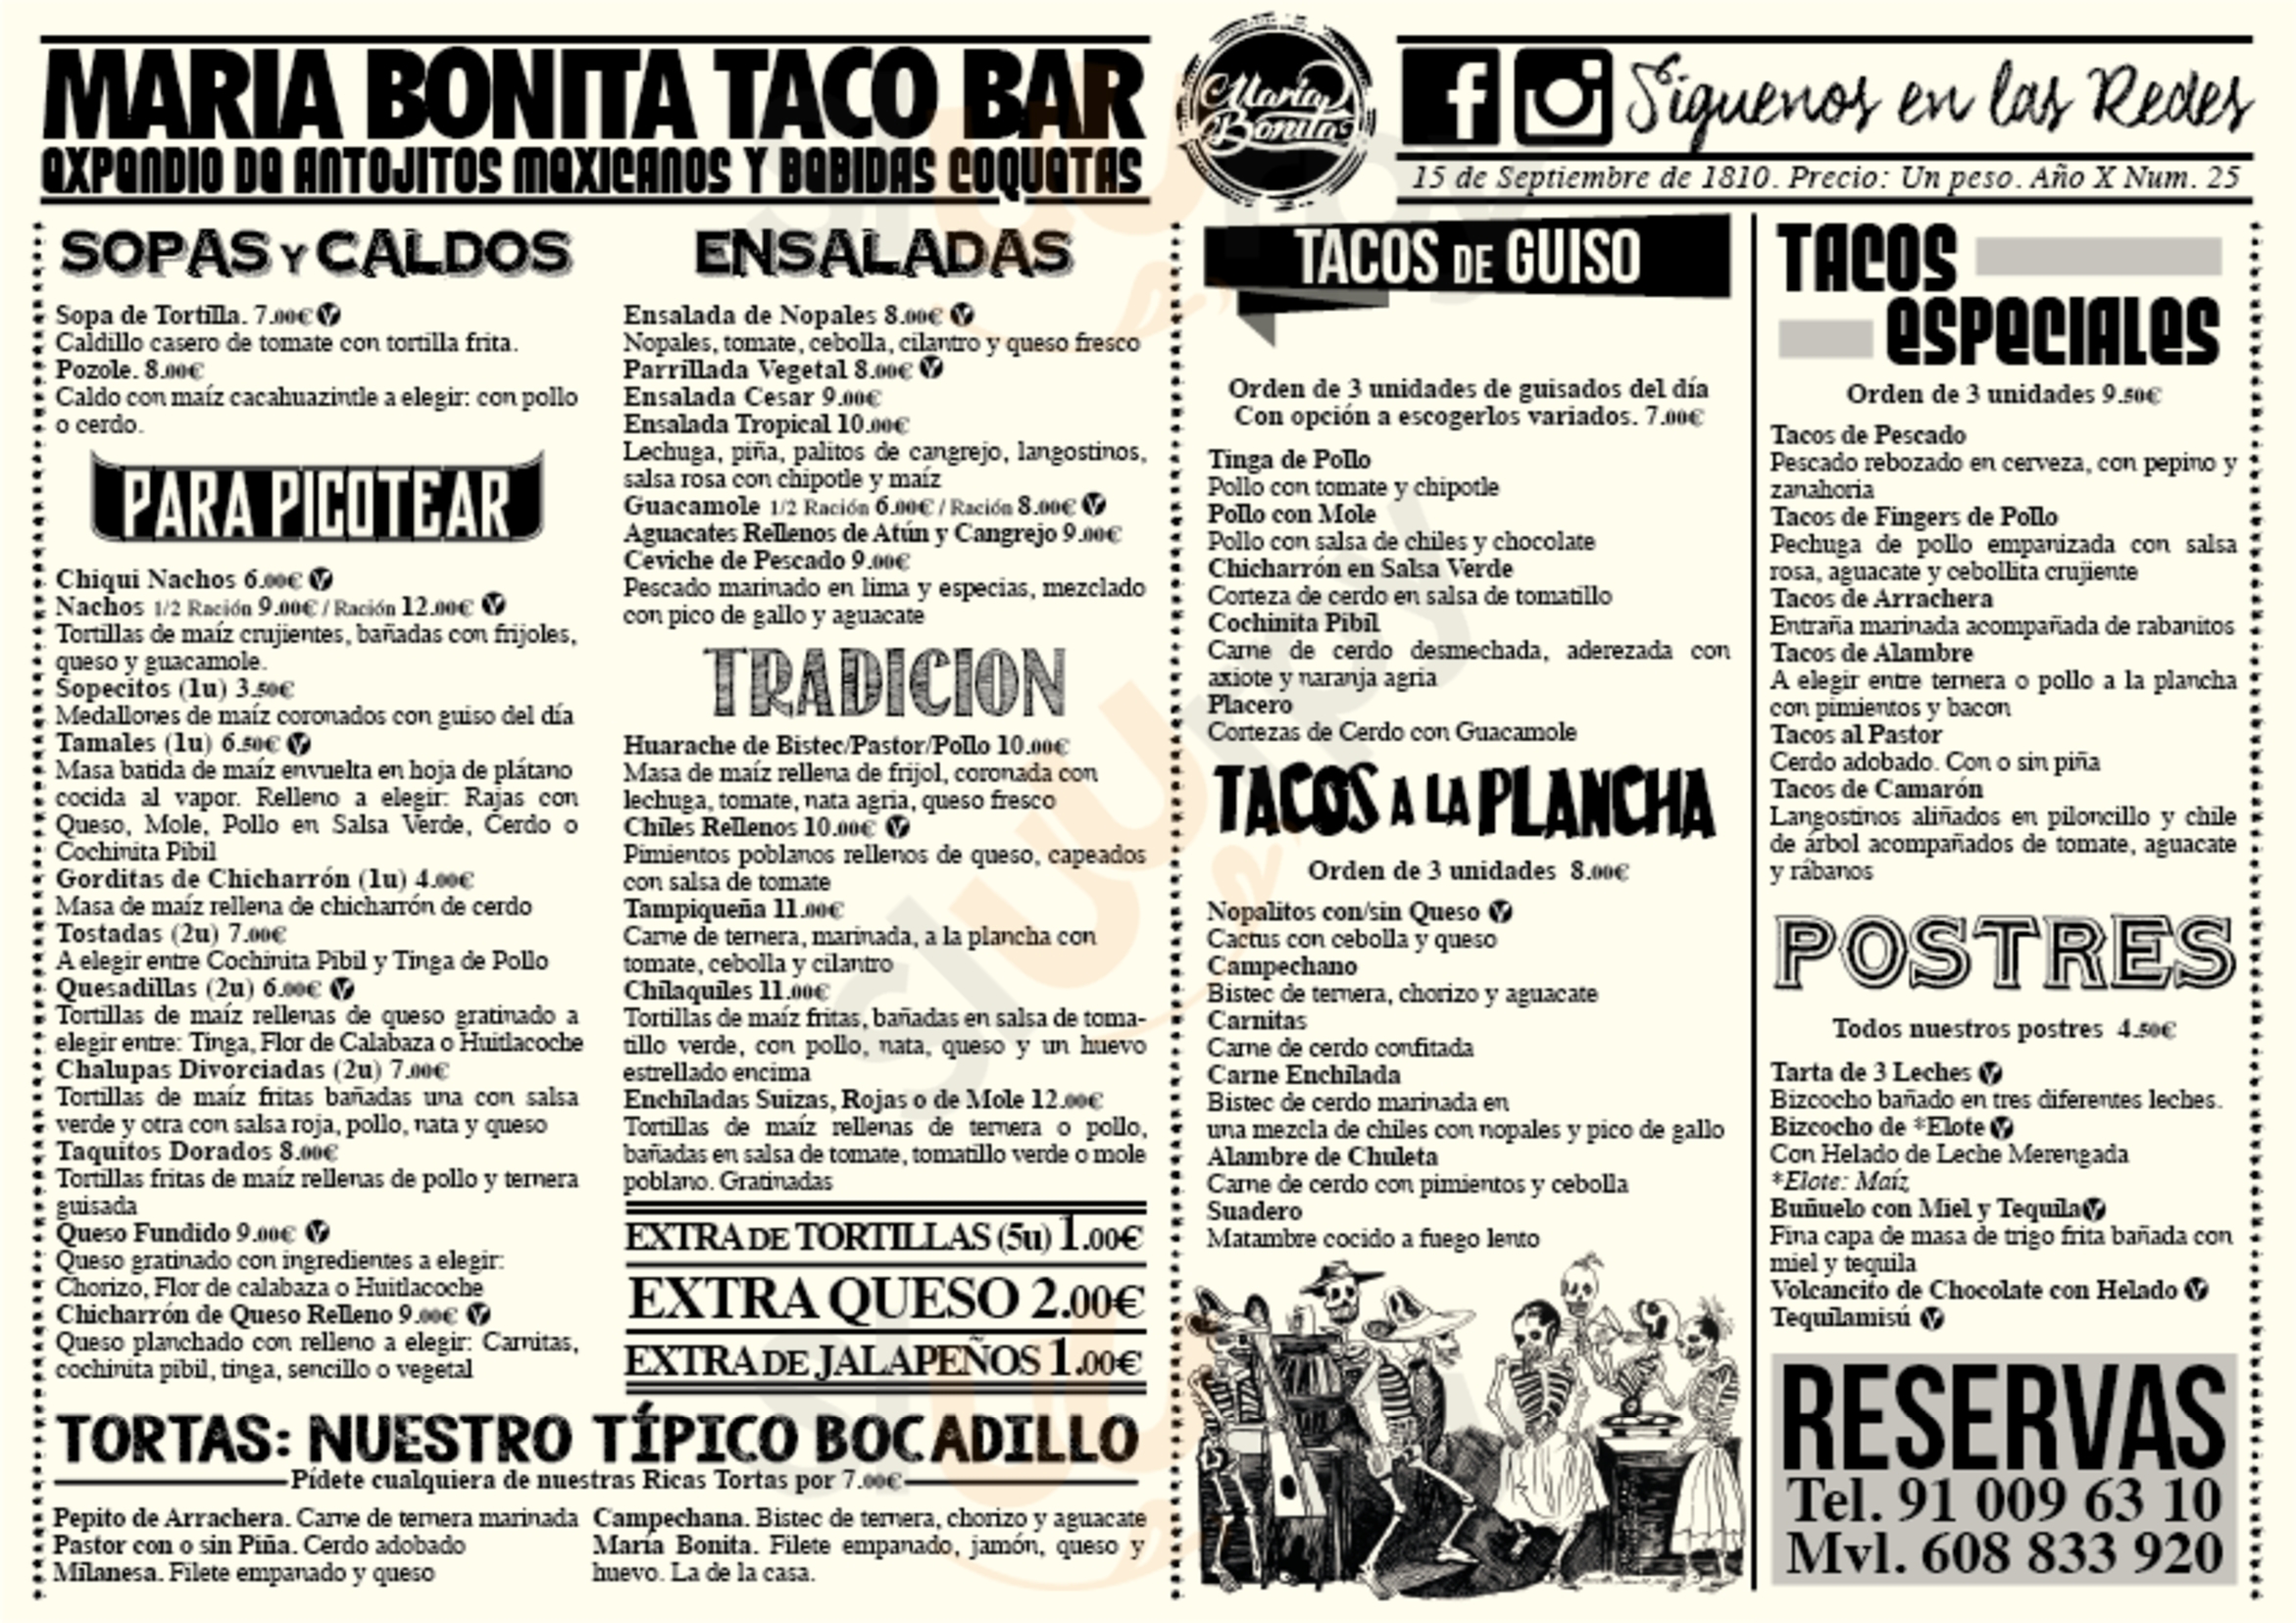 Maria Bonita Taco Bar Madrid Menu - 1